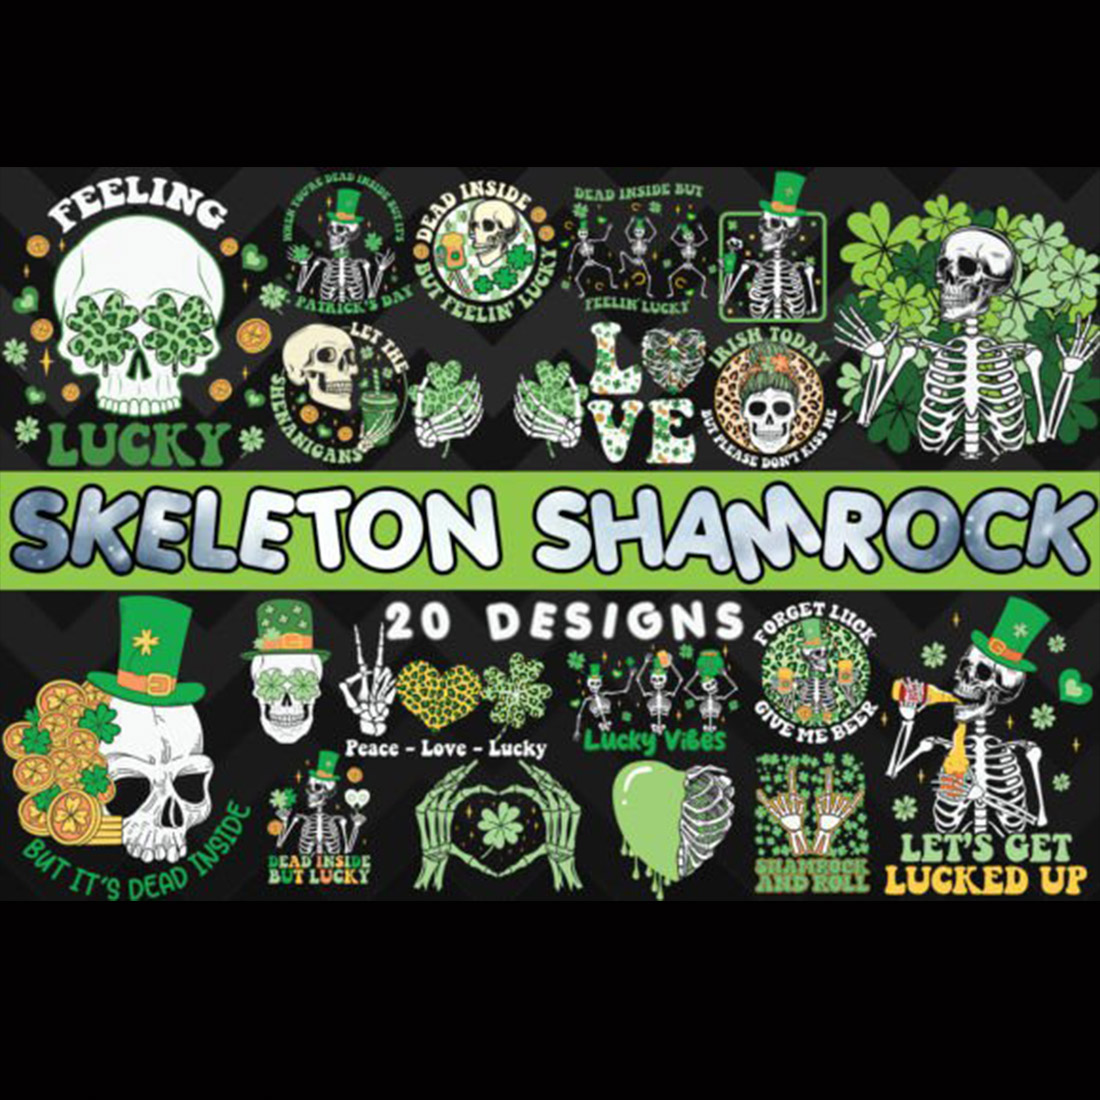 Skeleton St Patrick Day Bundle cover image.